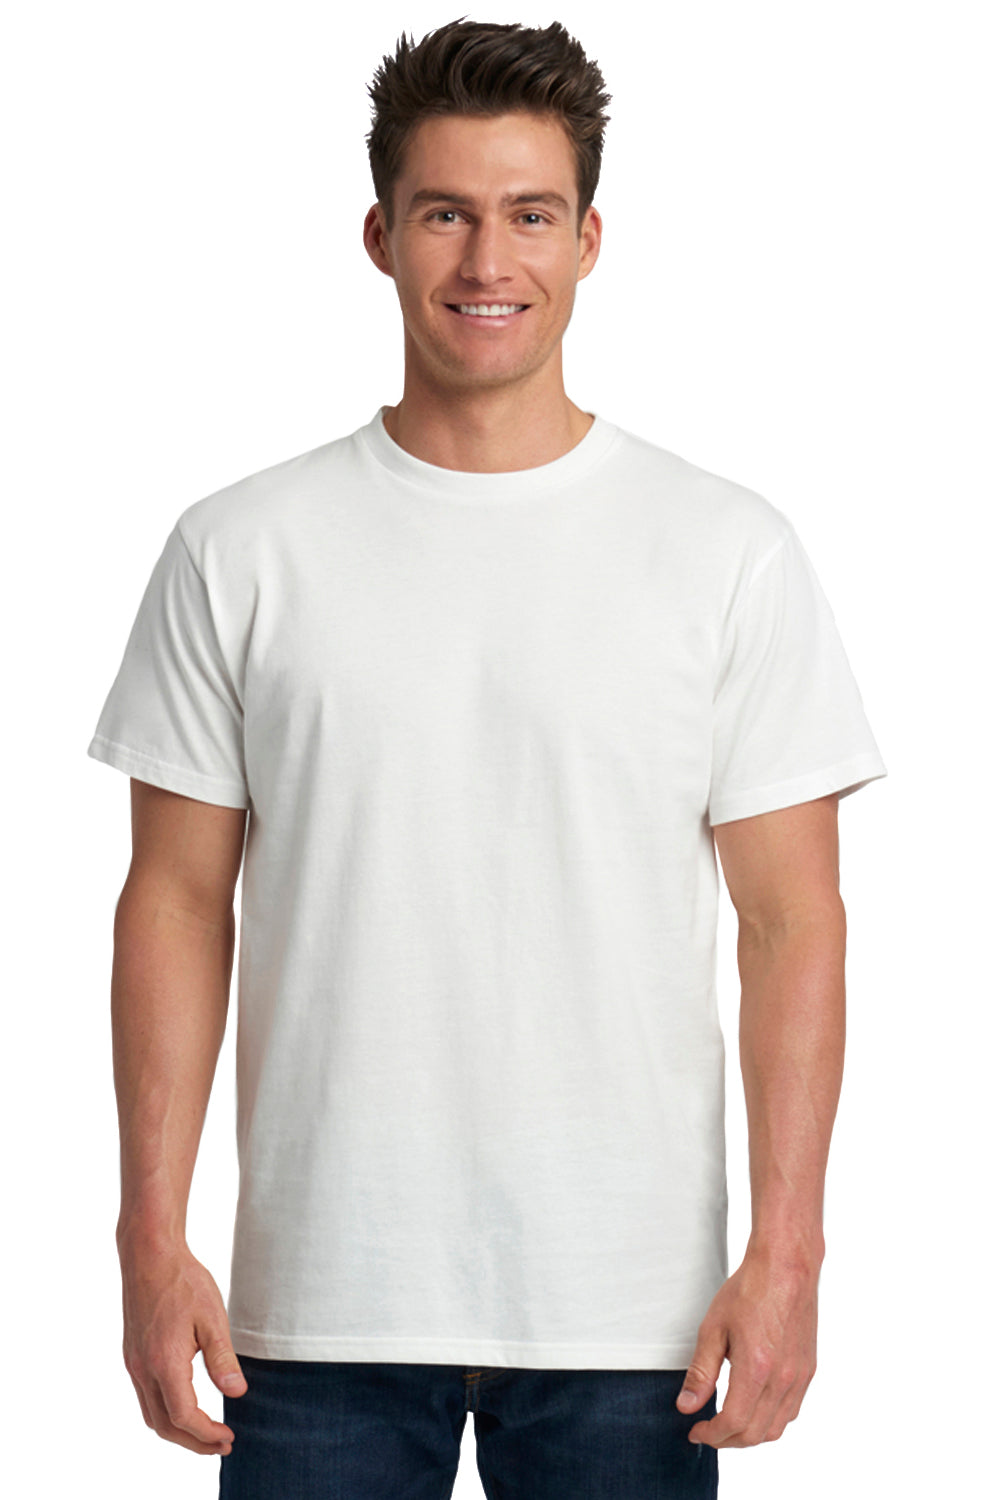 Next Level 7410 Mens Inspired Dye Jersey Short Sleeve Crewneck T-Shirt White Front